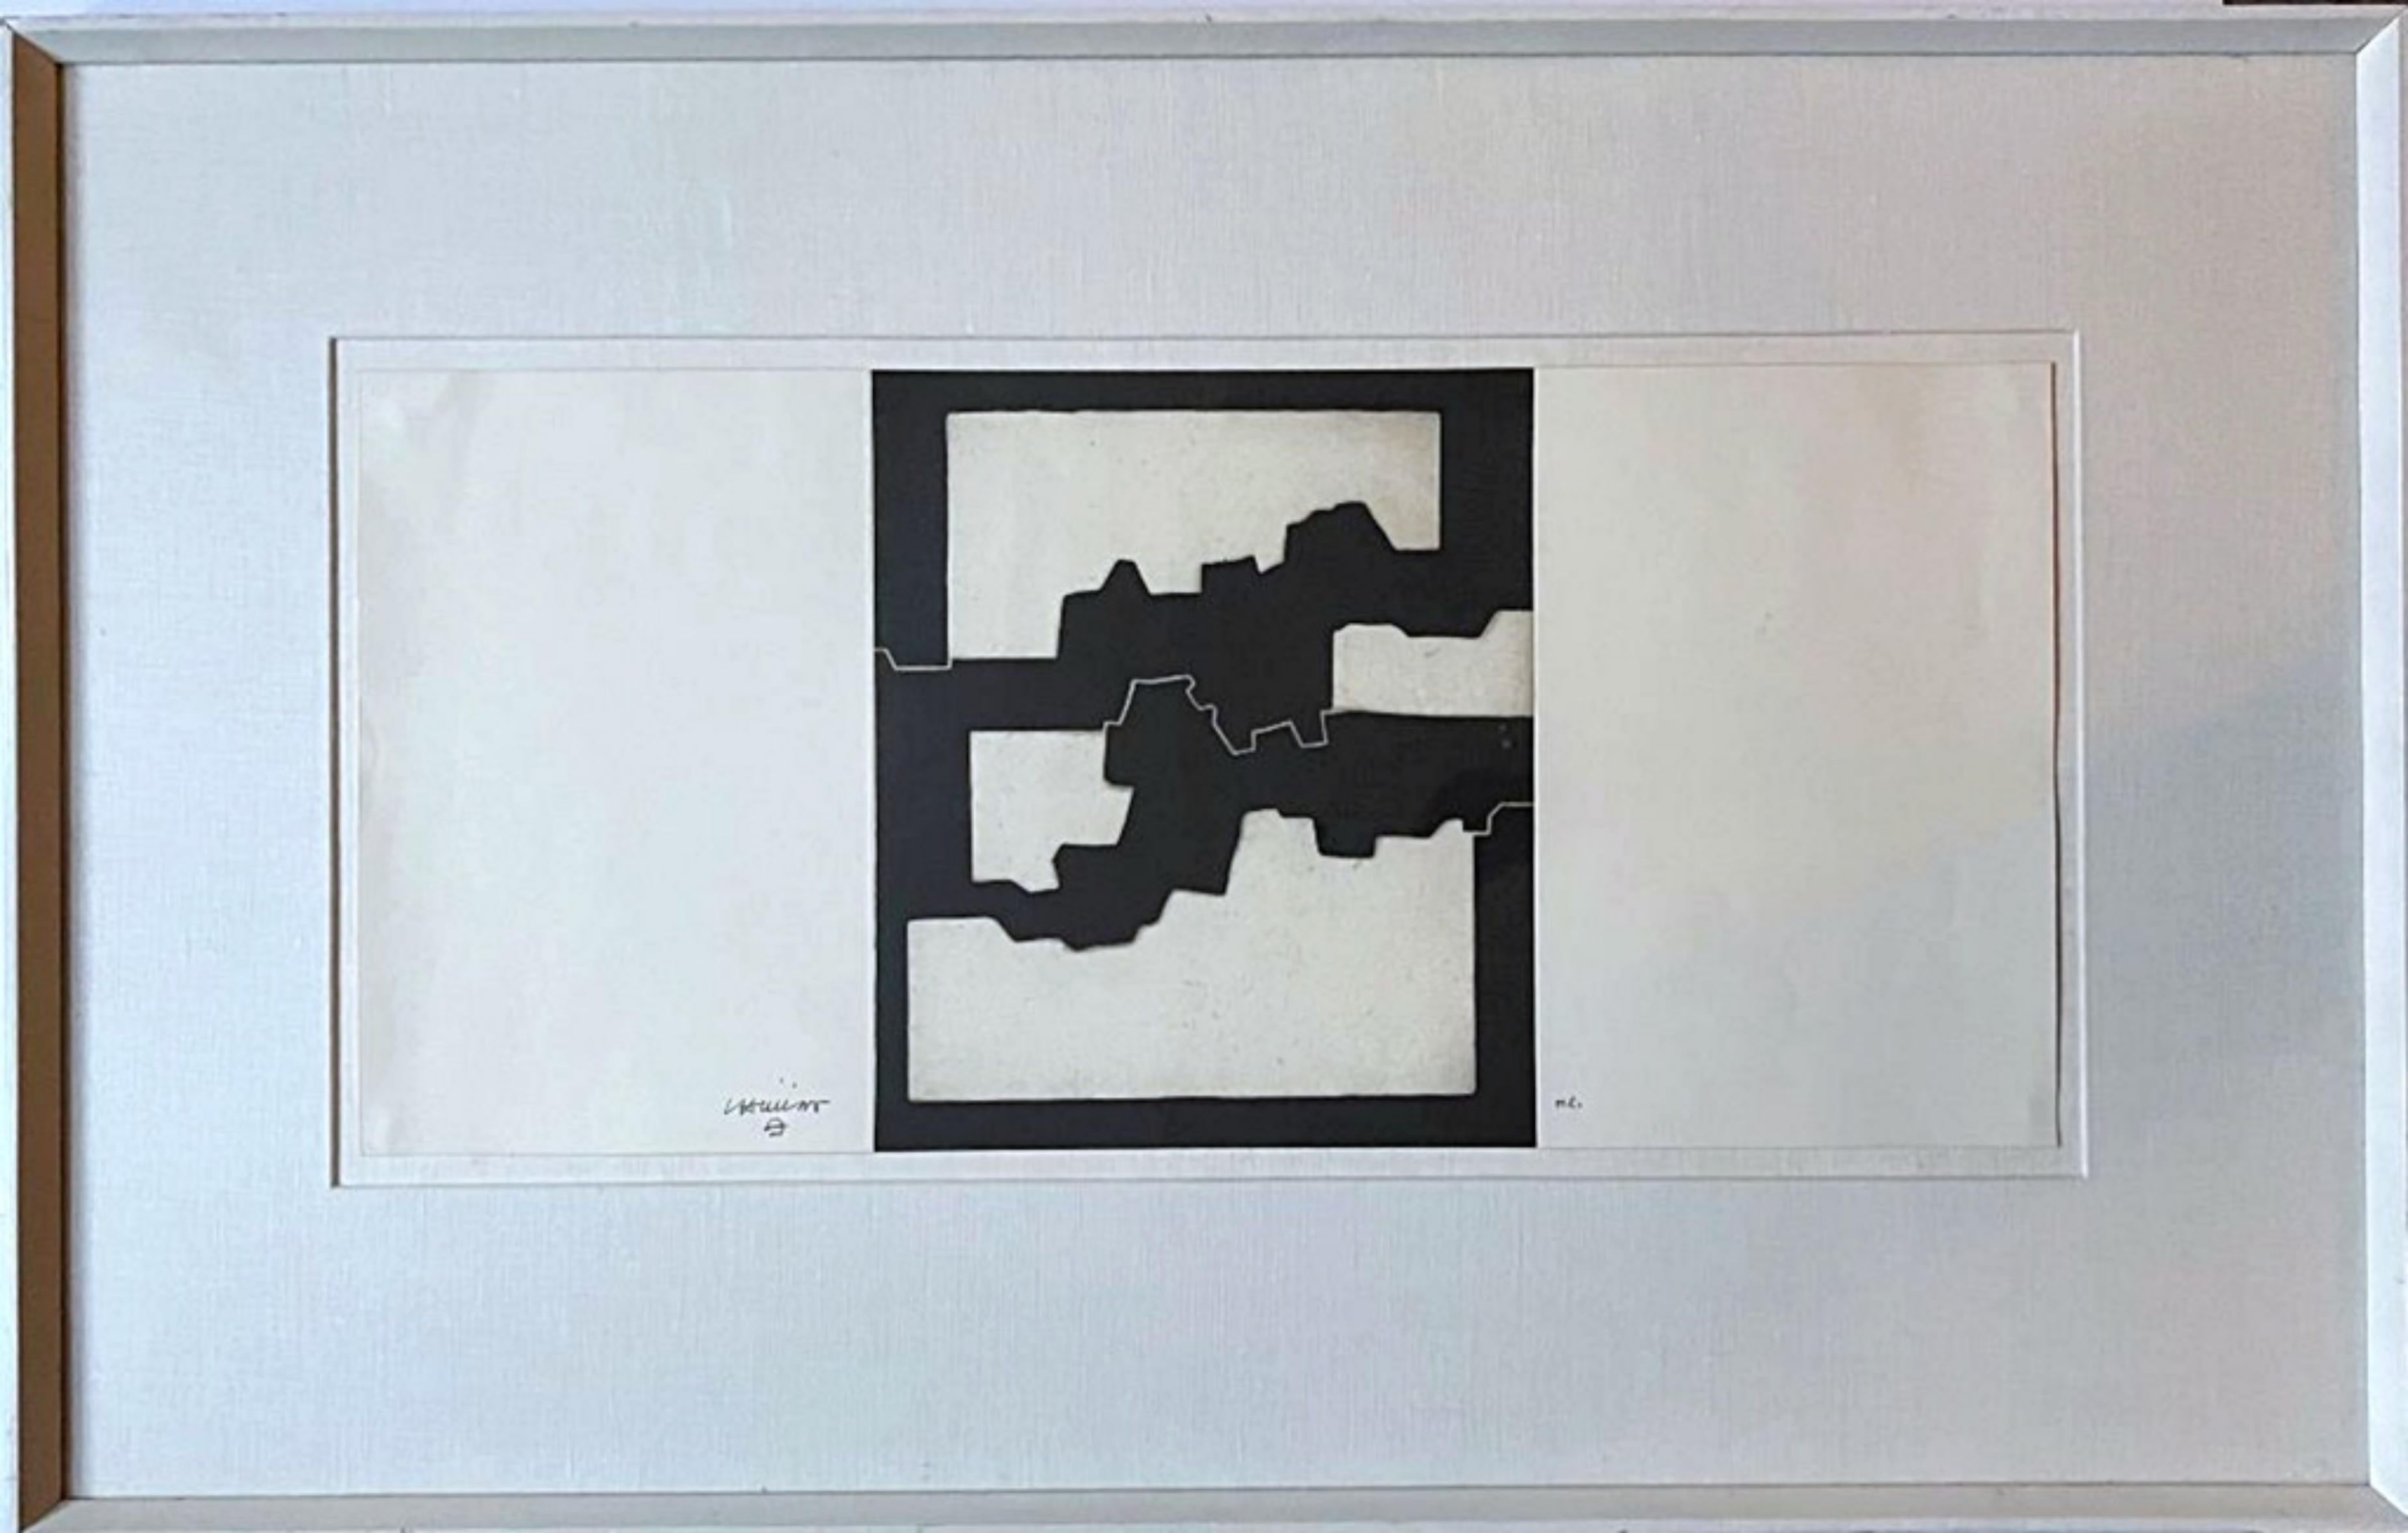 Eduardo Chillida Abstract Print - Elkar IV (Iolas-Velasco, 71)